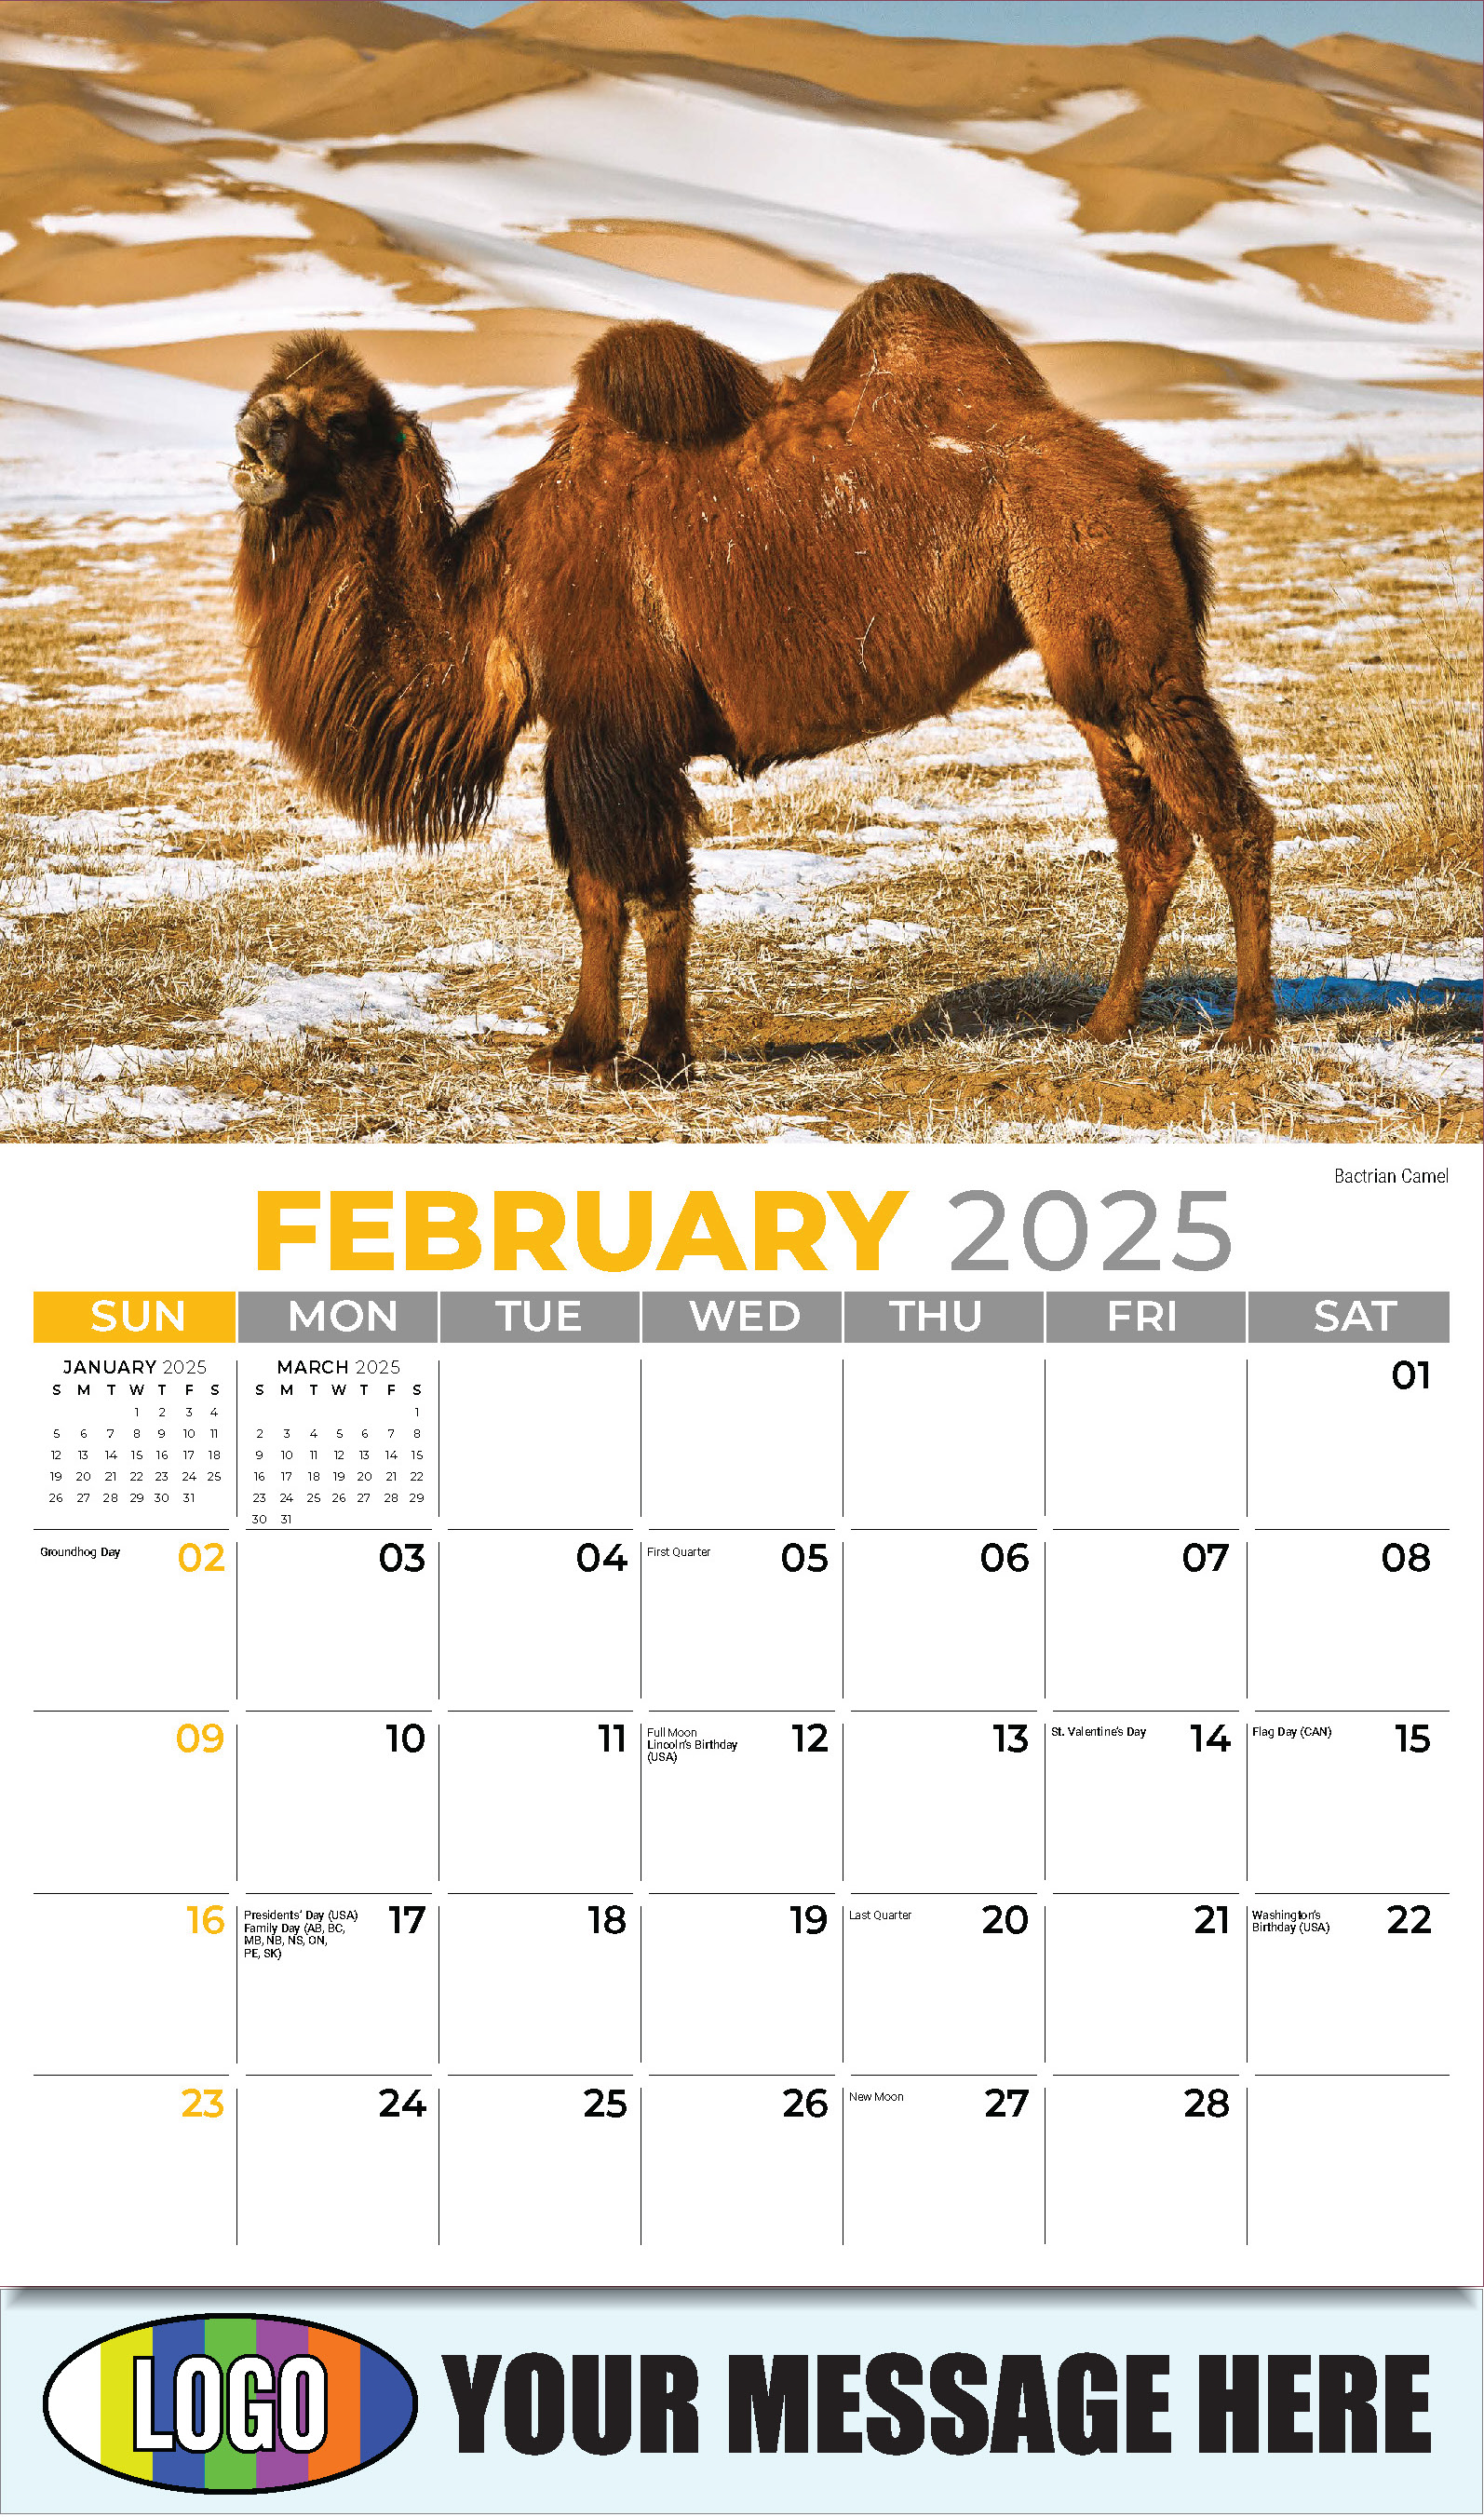 International Wildlife 2025 Business Advertising Wall Calendar - February